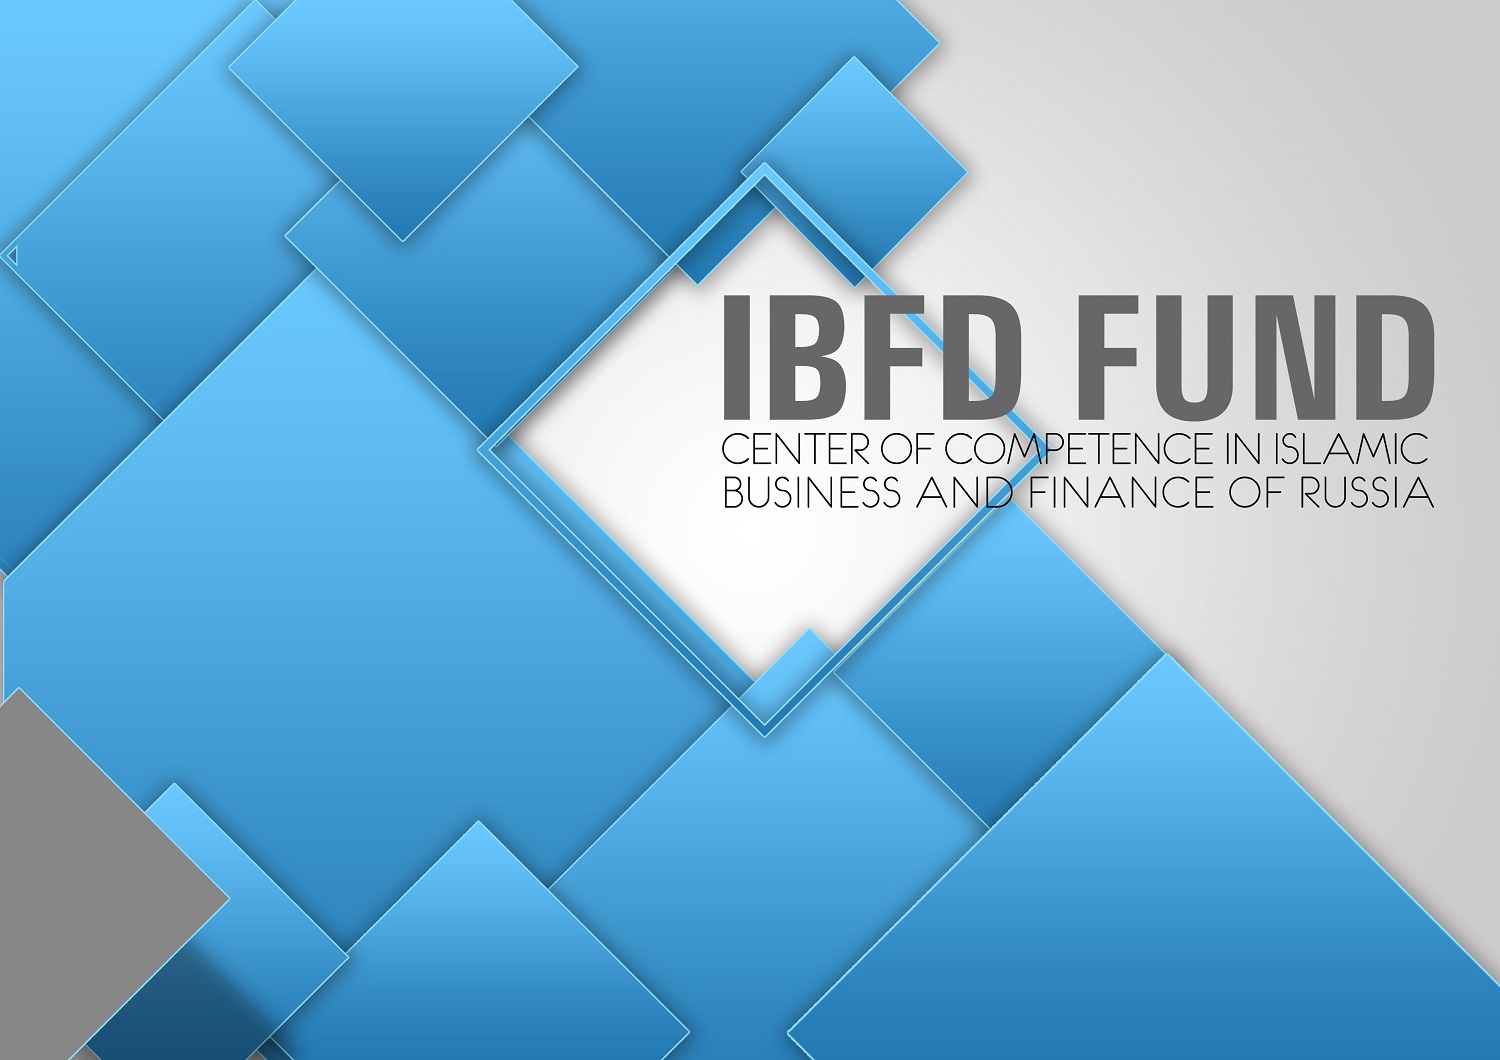 IBFD Fund